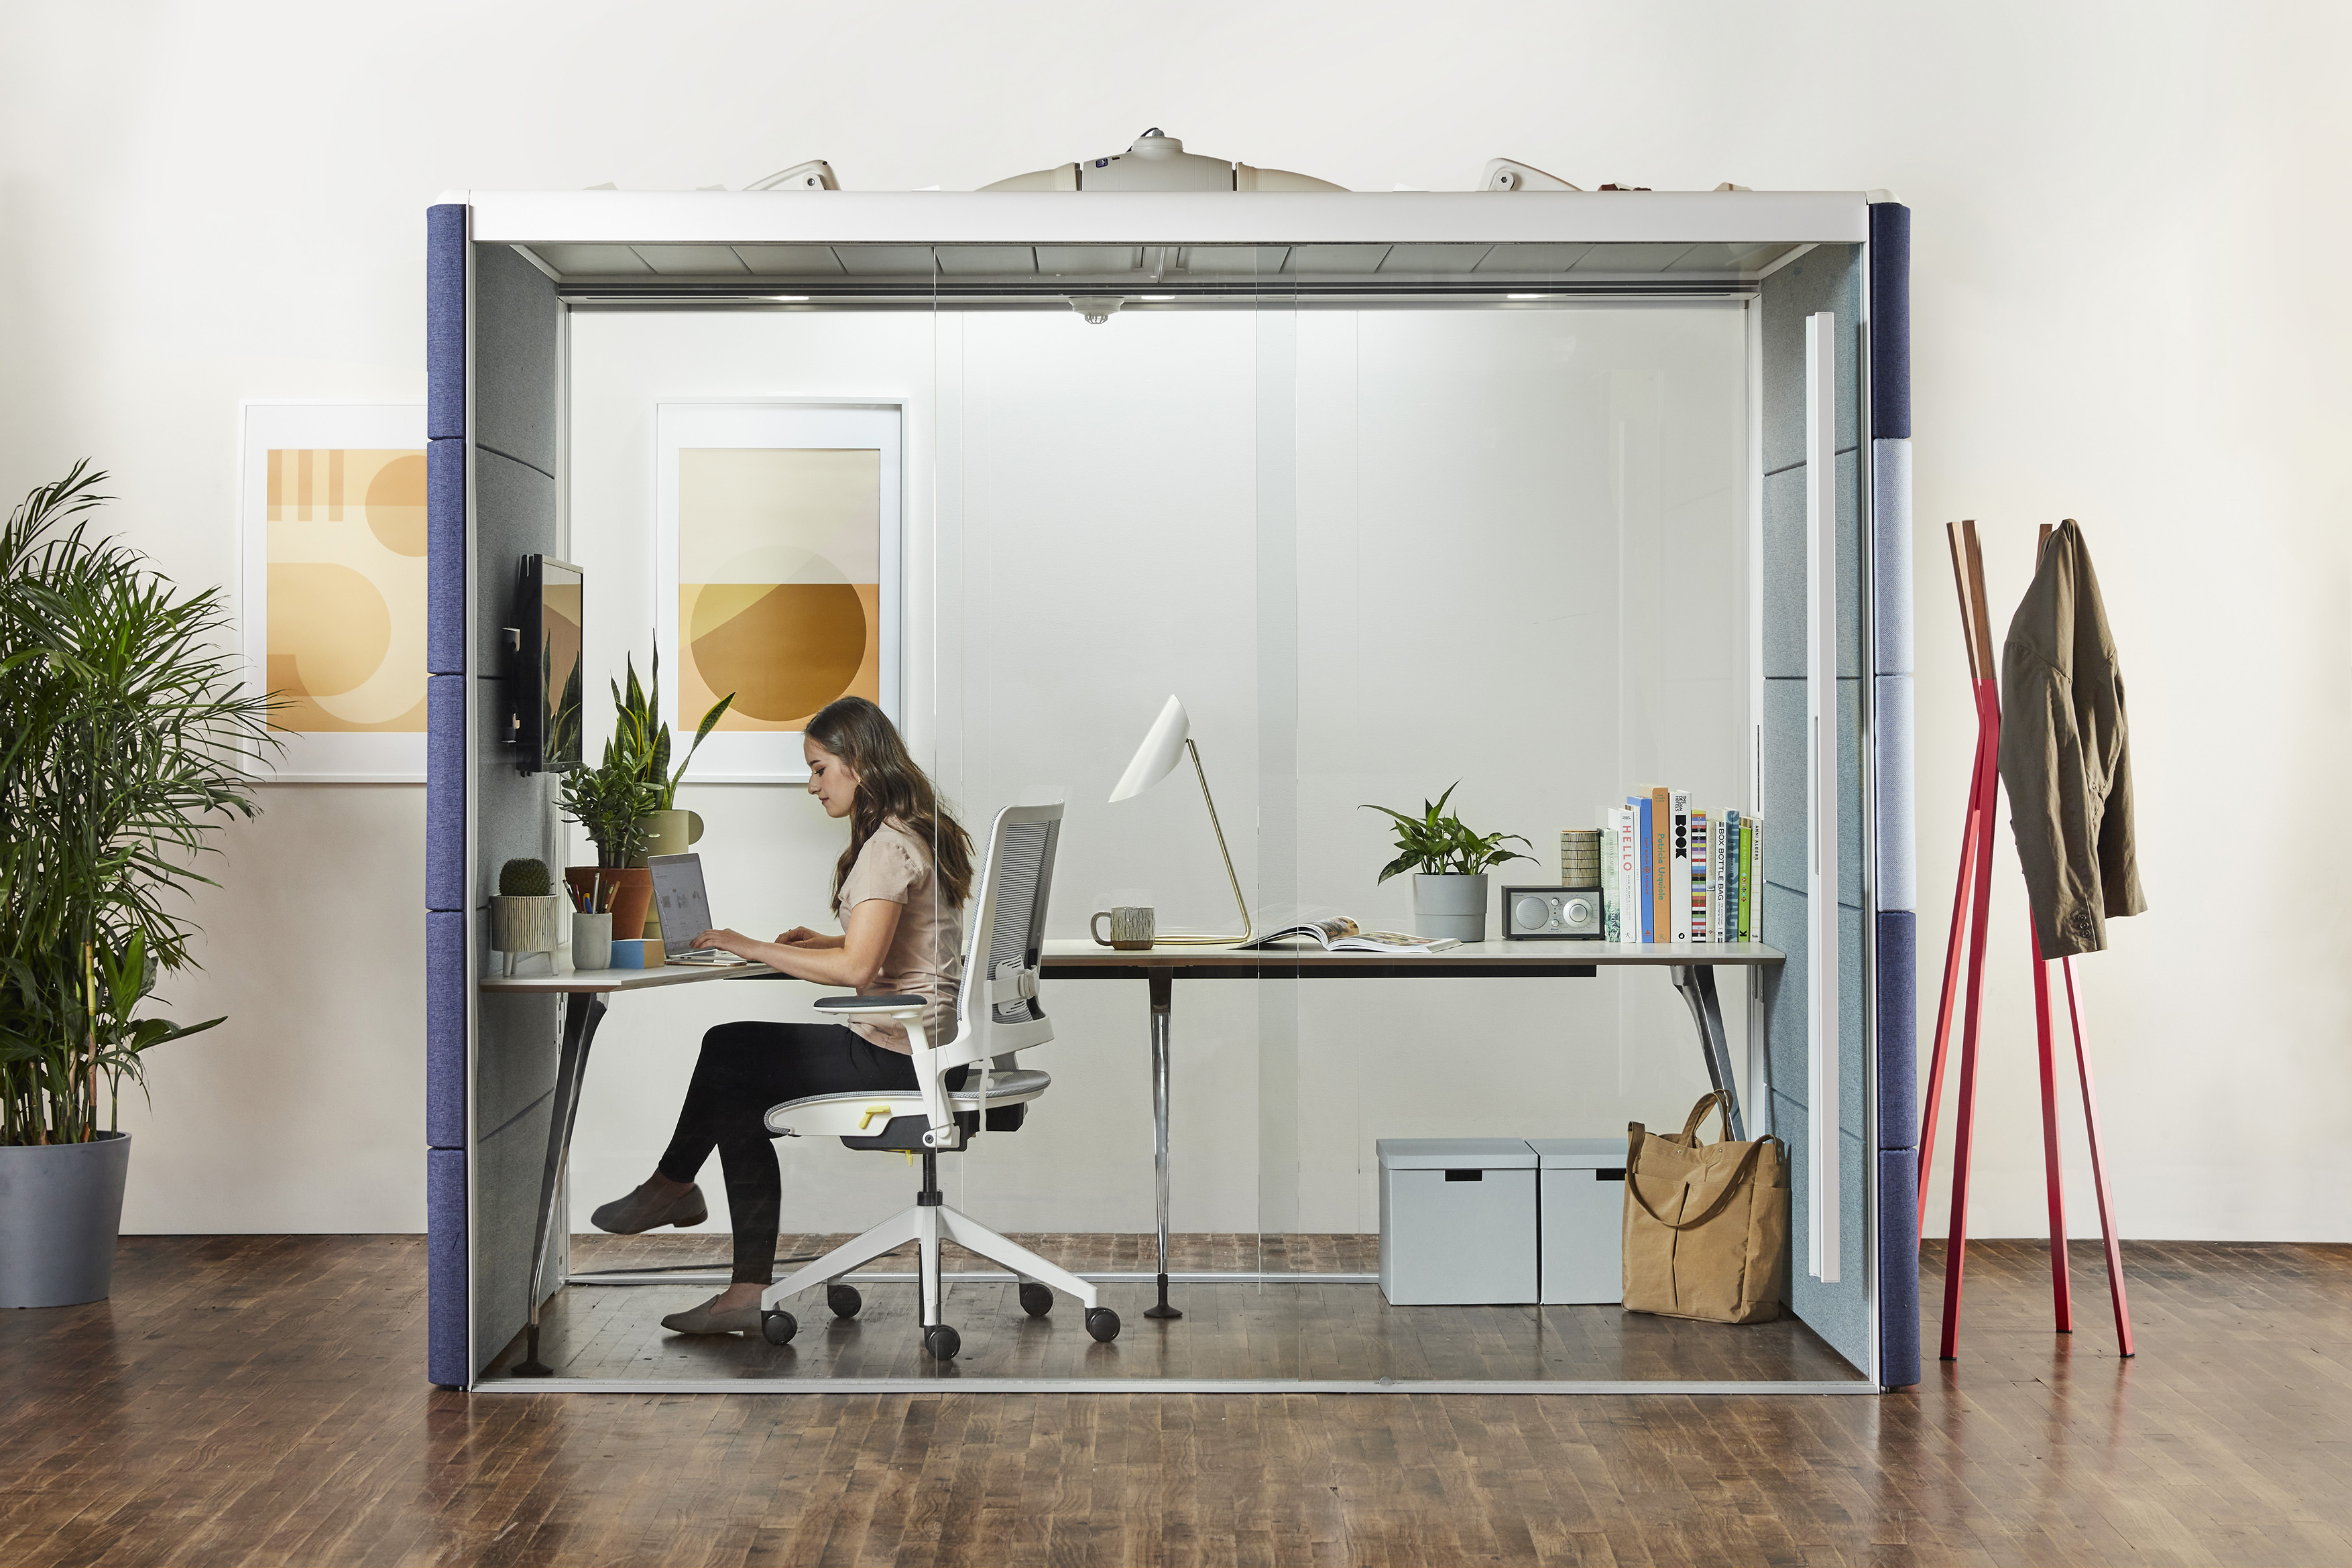 Think Furniture Inspiration By Area - Focused Work Zone - Orangebox